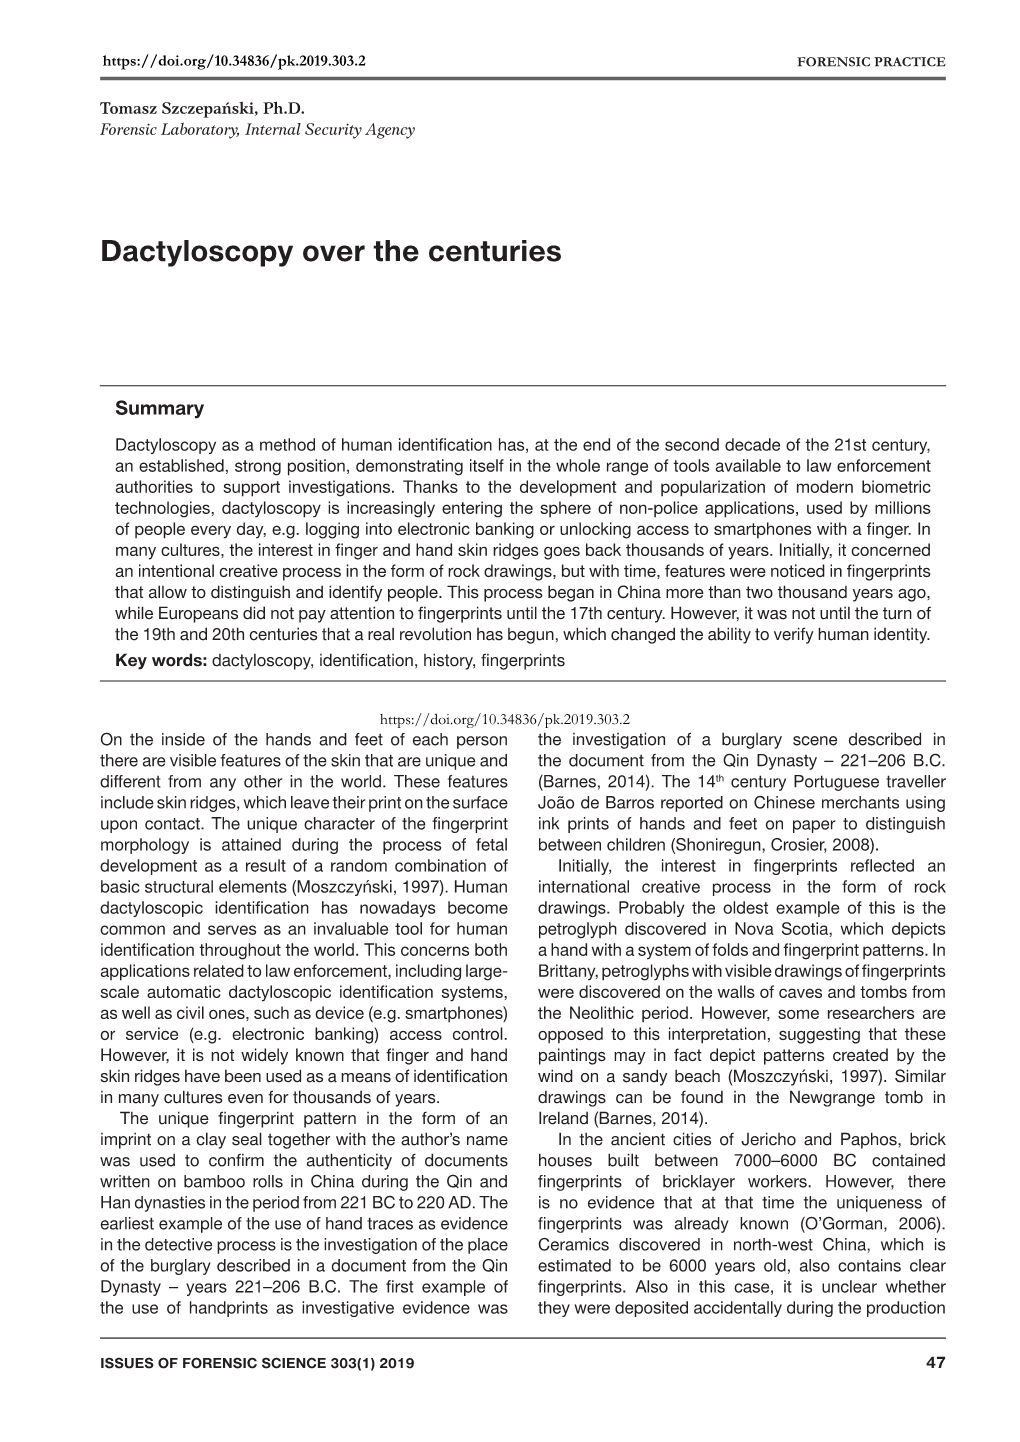 Dactyloscopy Over the Centuries